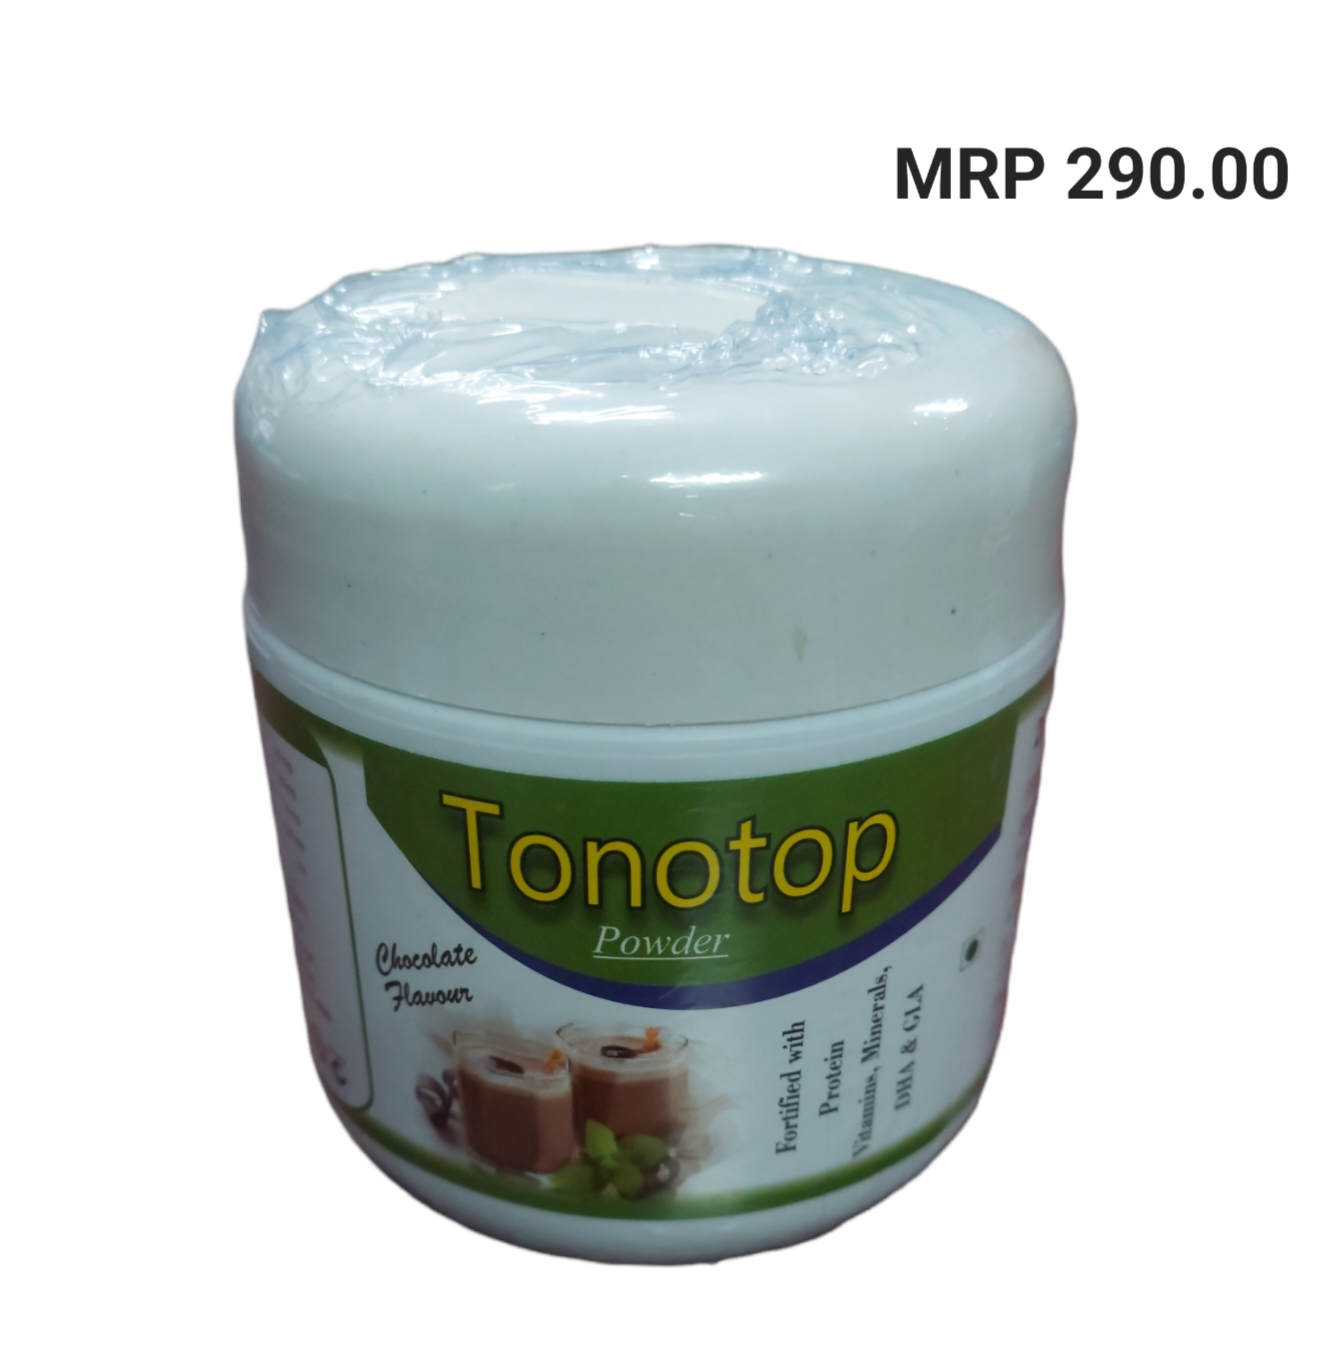 Tonotop-Powder